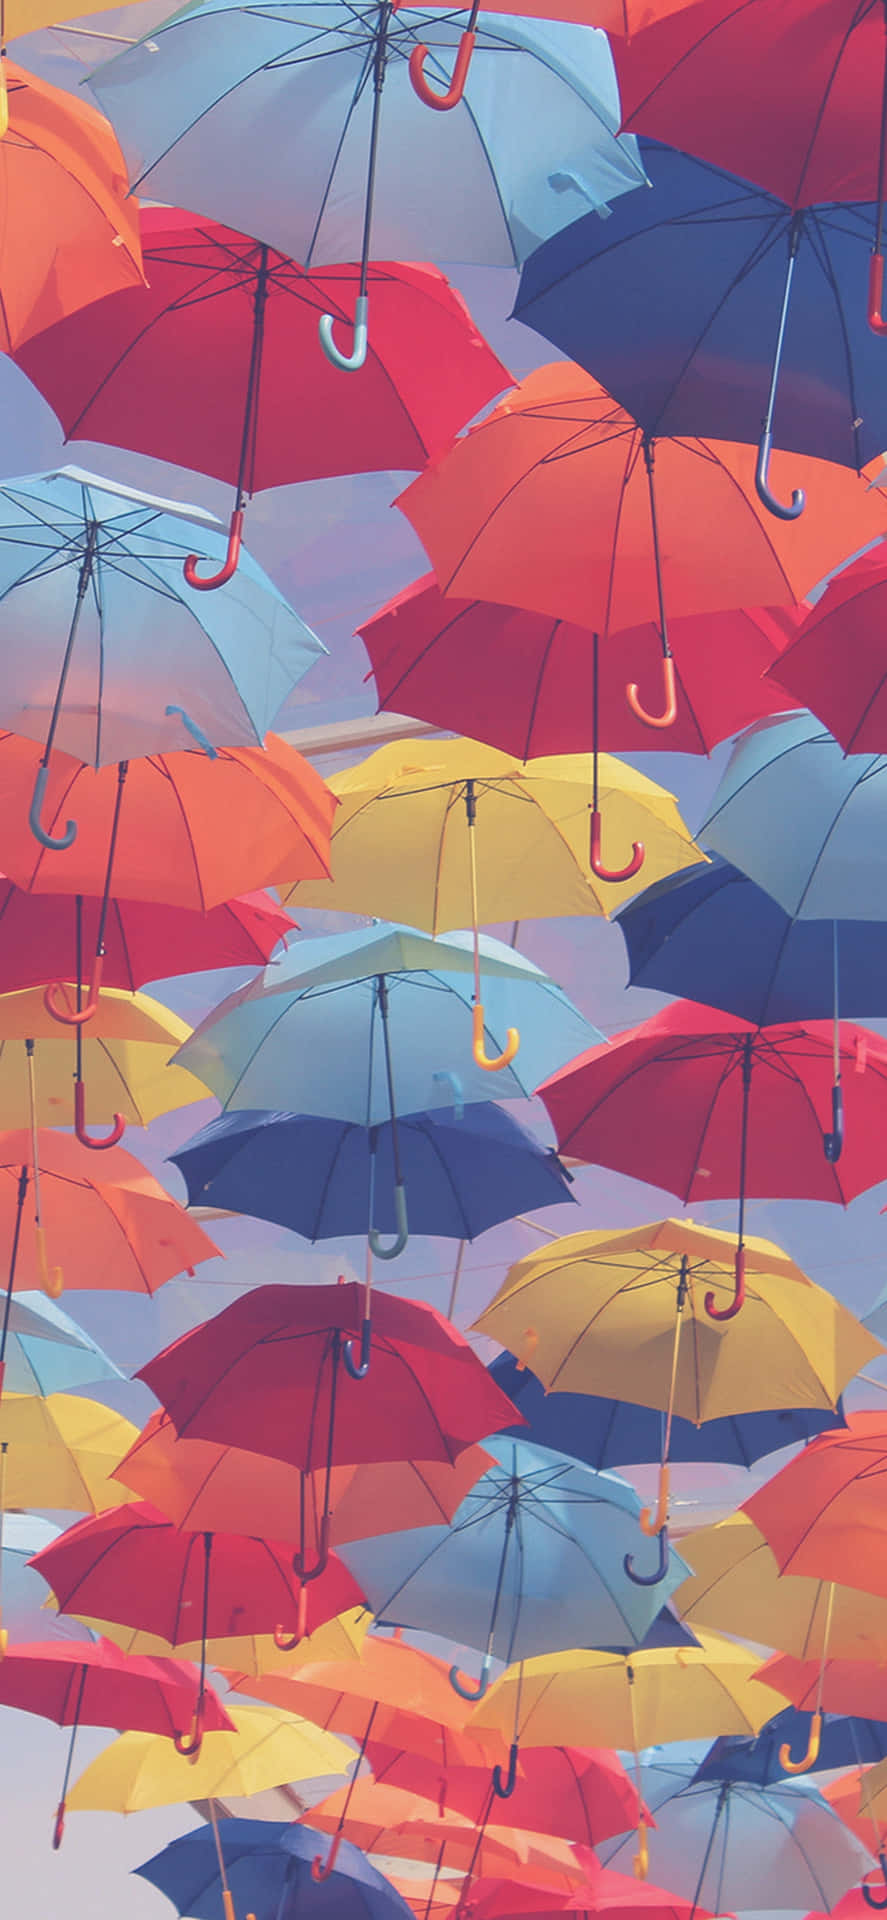 Colorful Umbrella Canopy Background